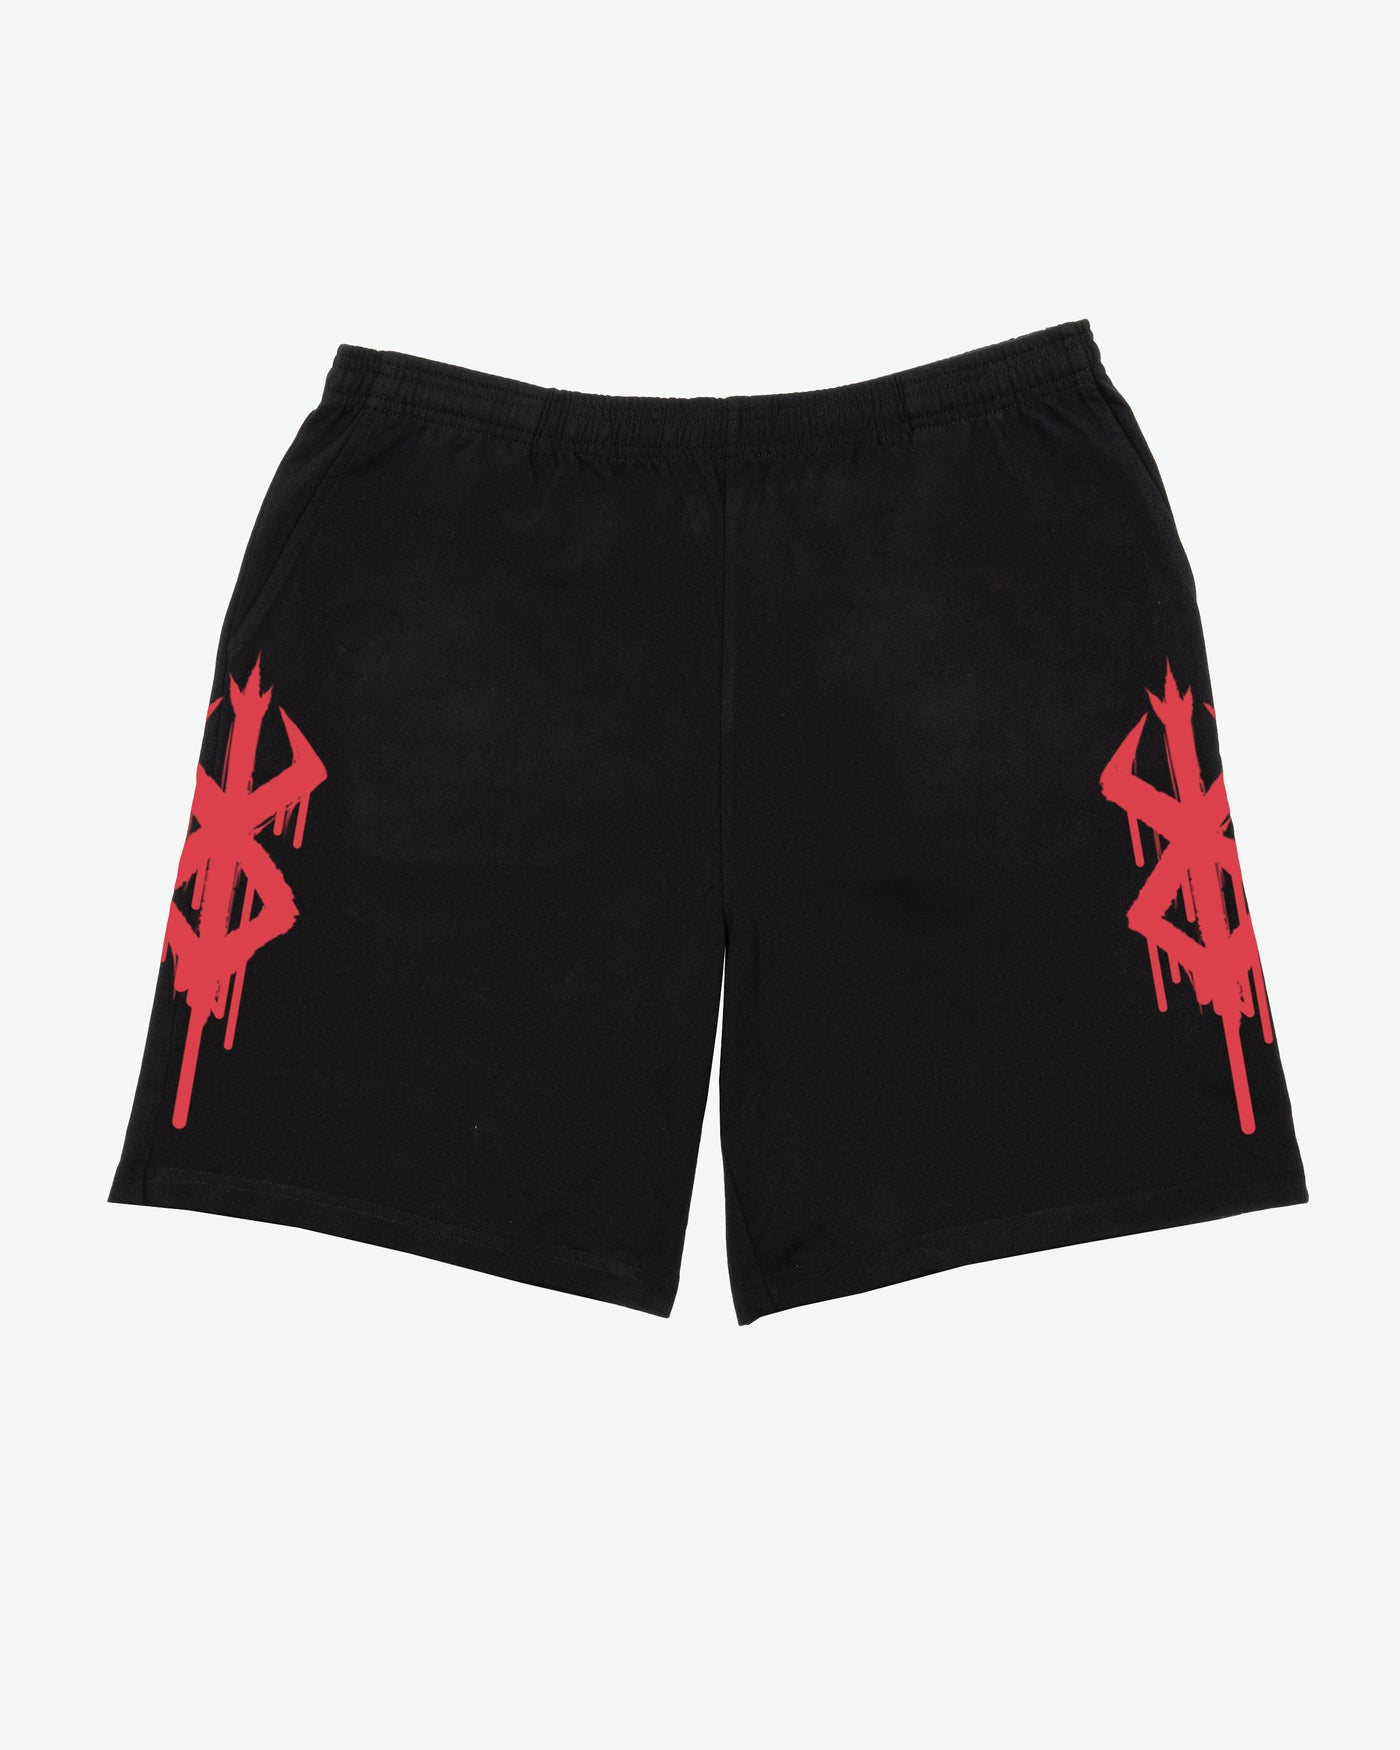 Brand of Sacrifice Shorts / Black